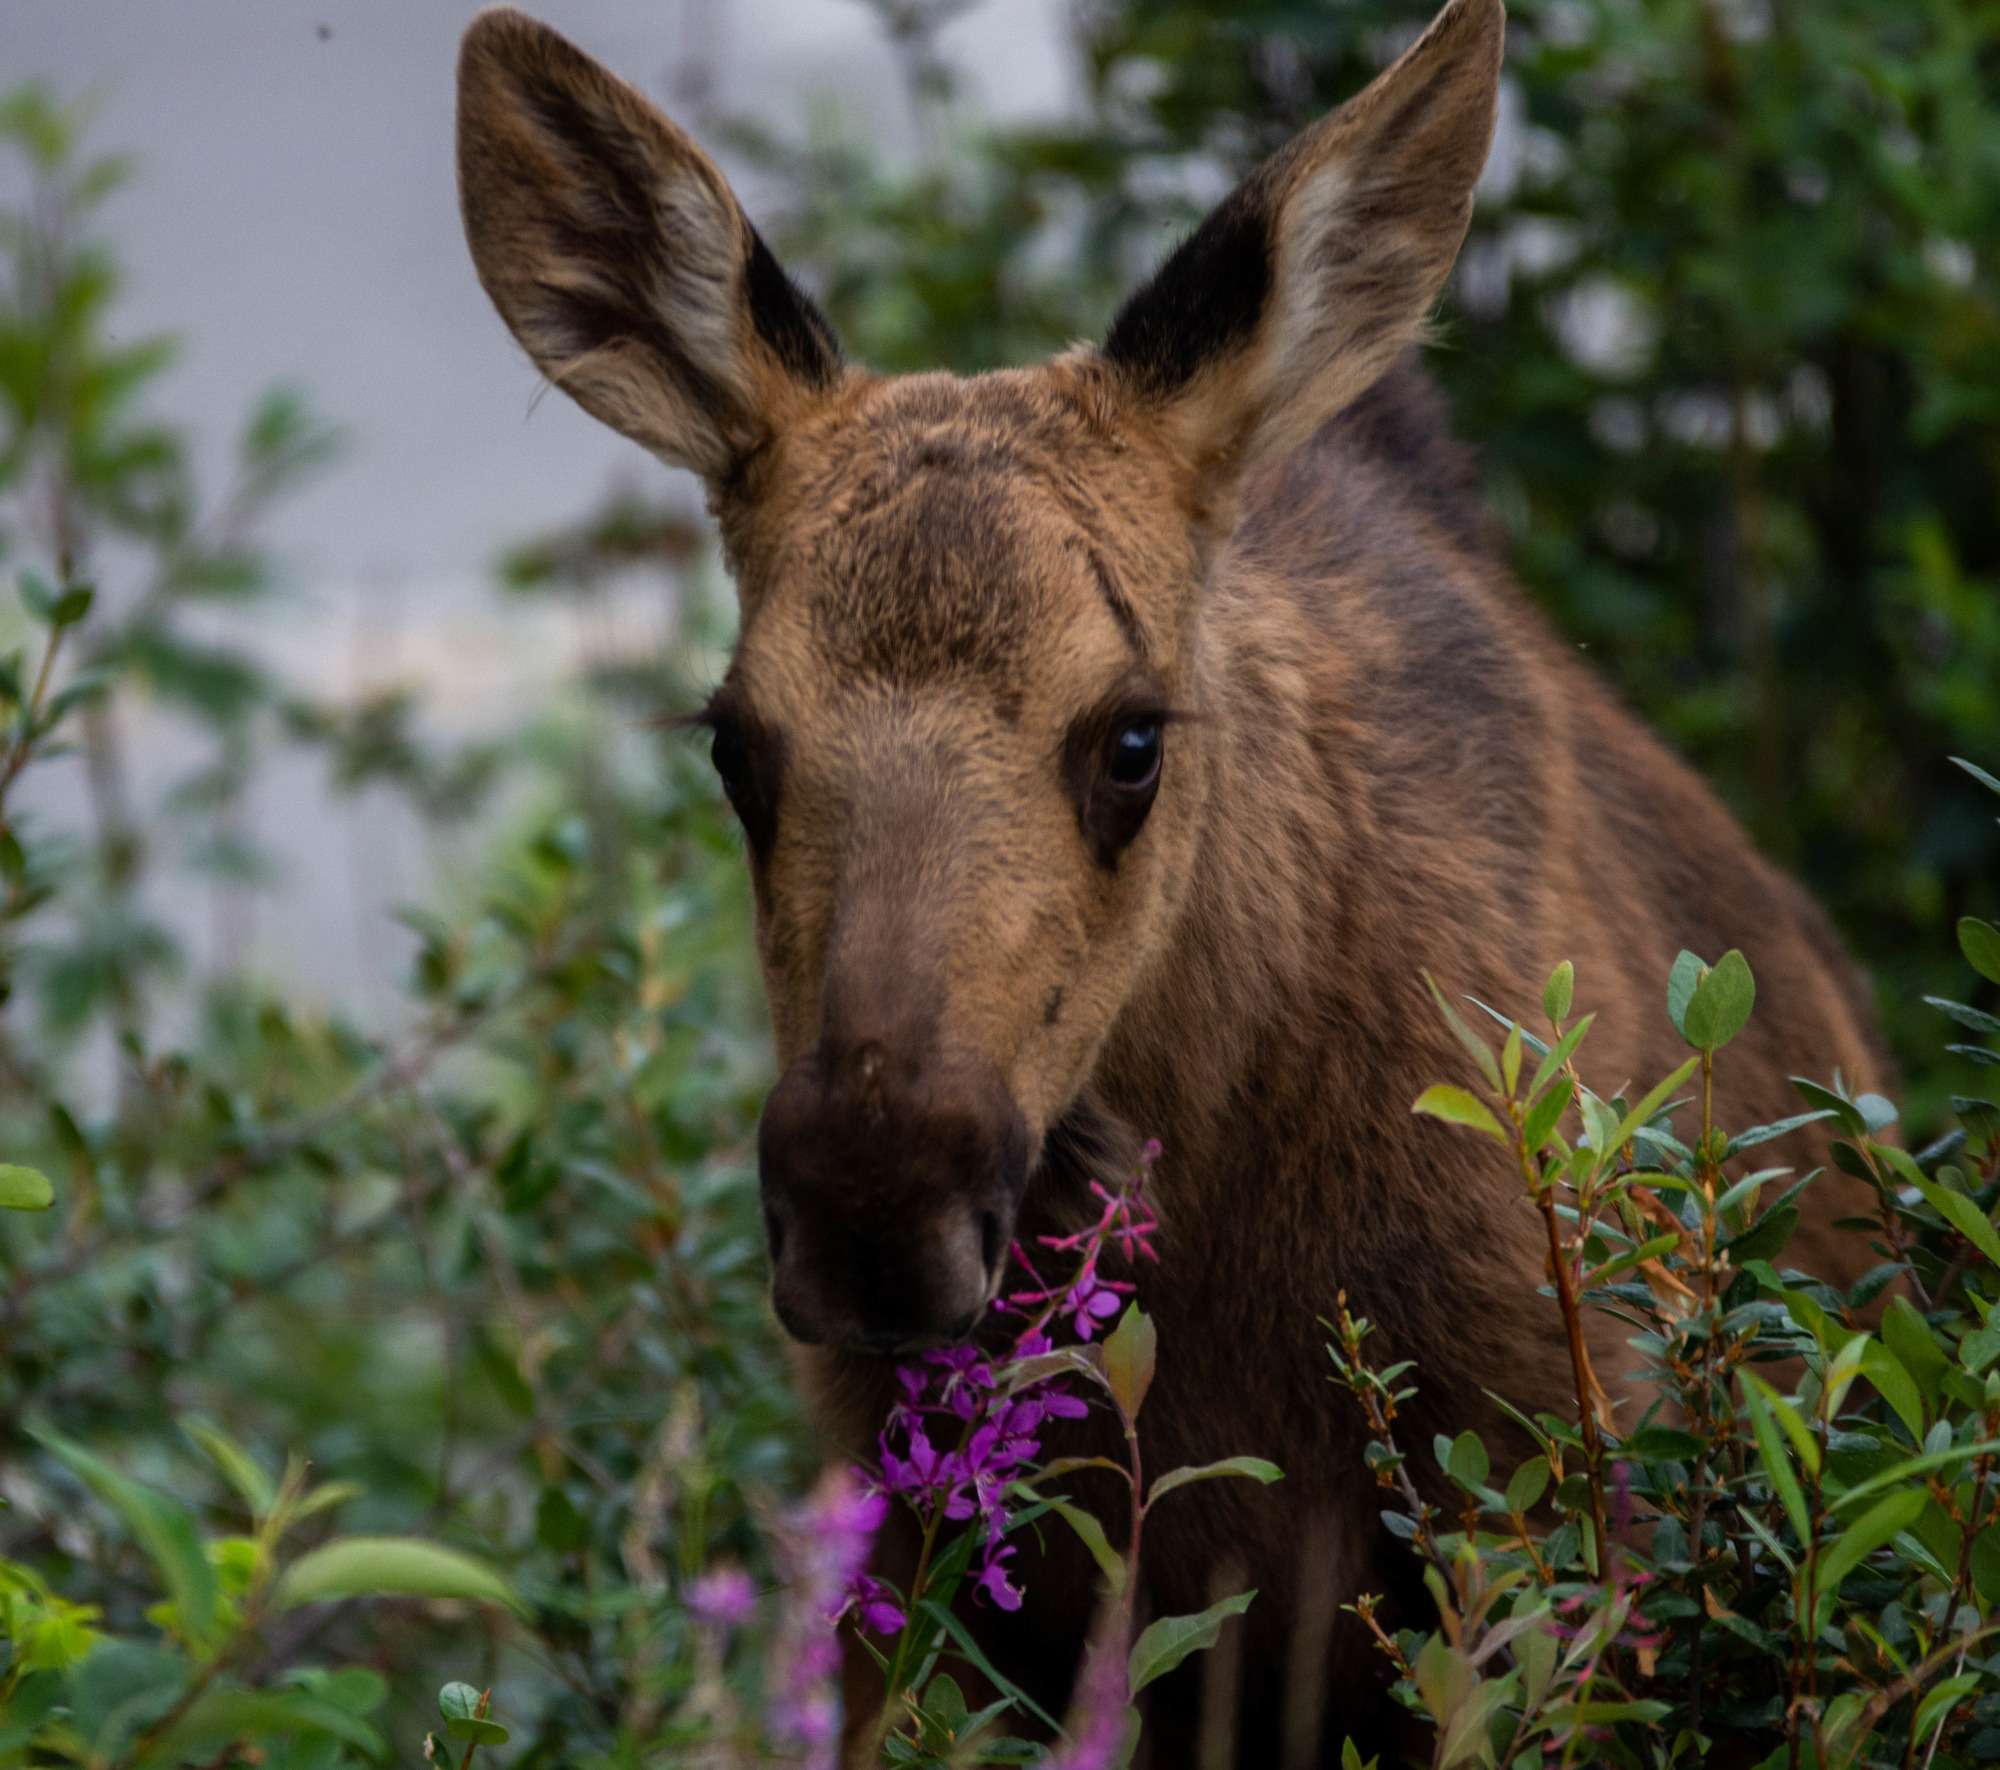 A moose calf eating fireweed